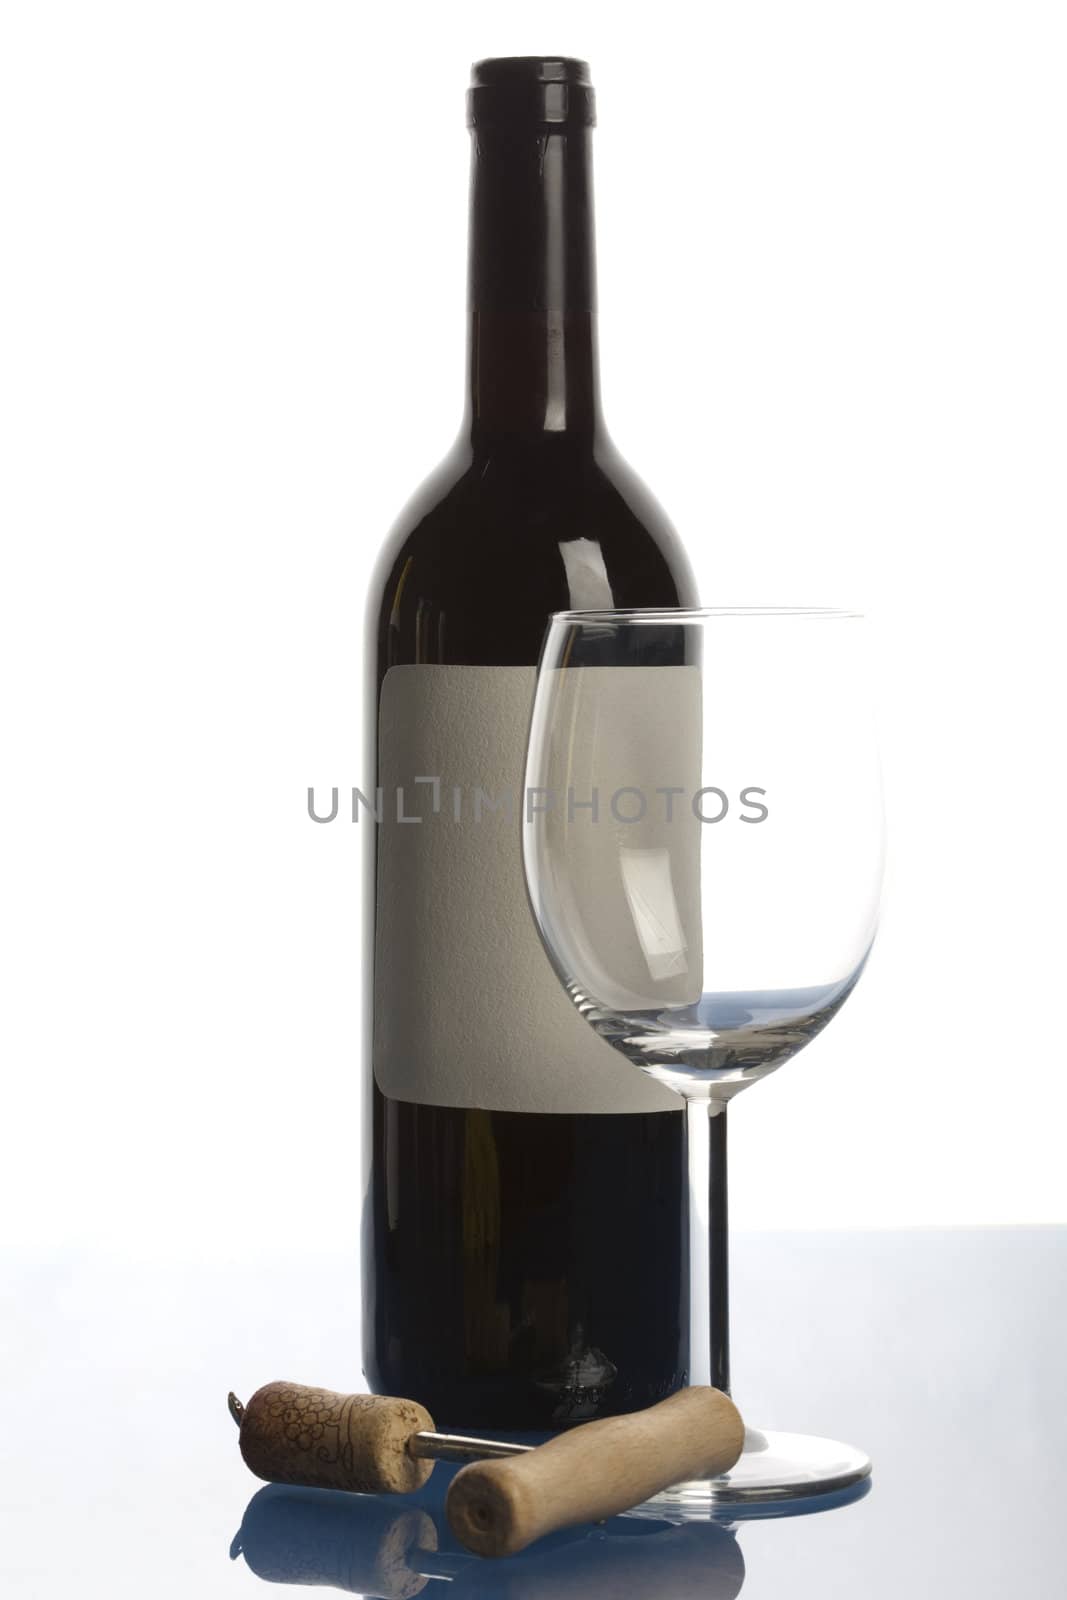 Alcohol - a bottle of wine on light background